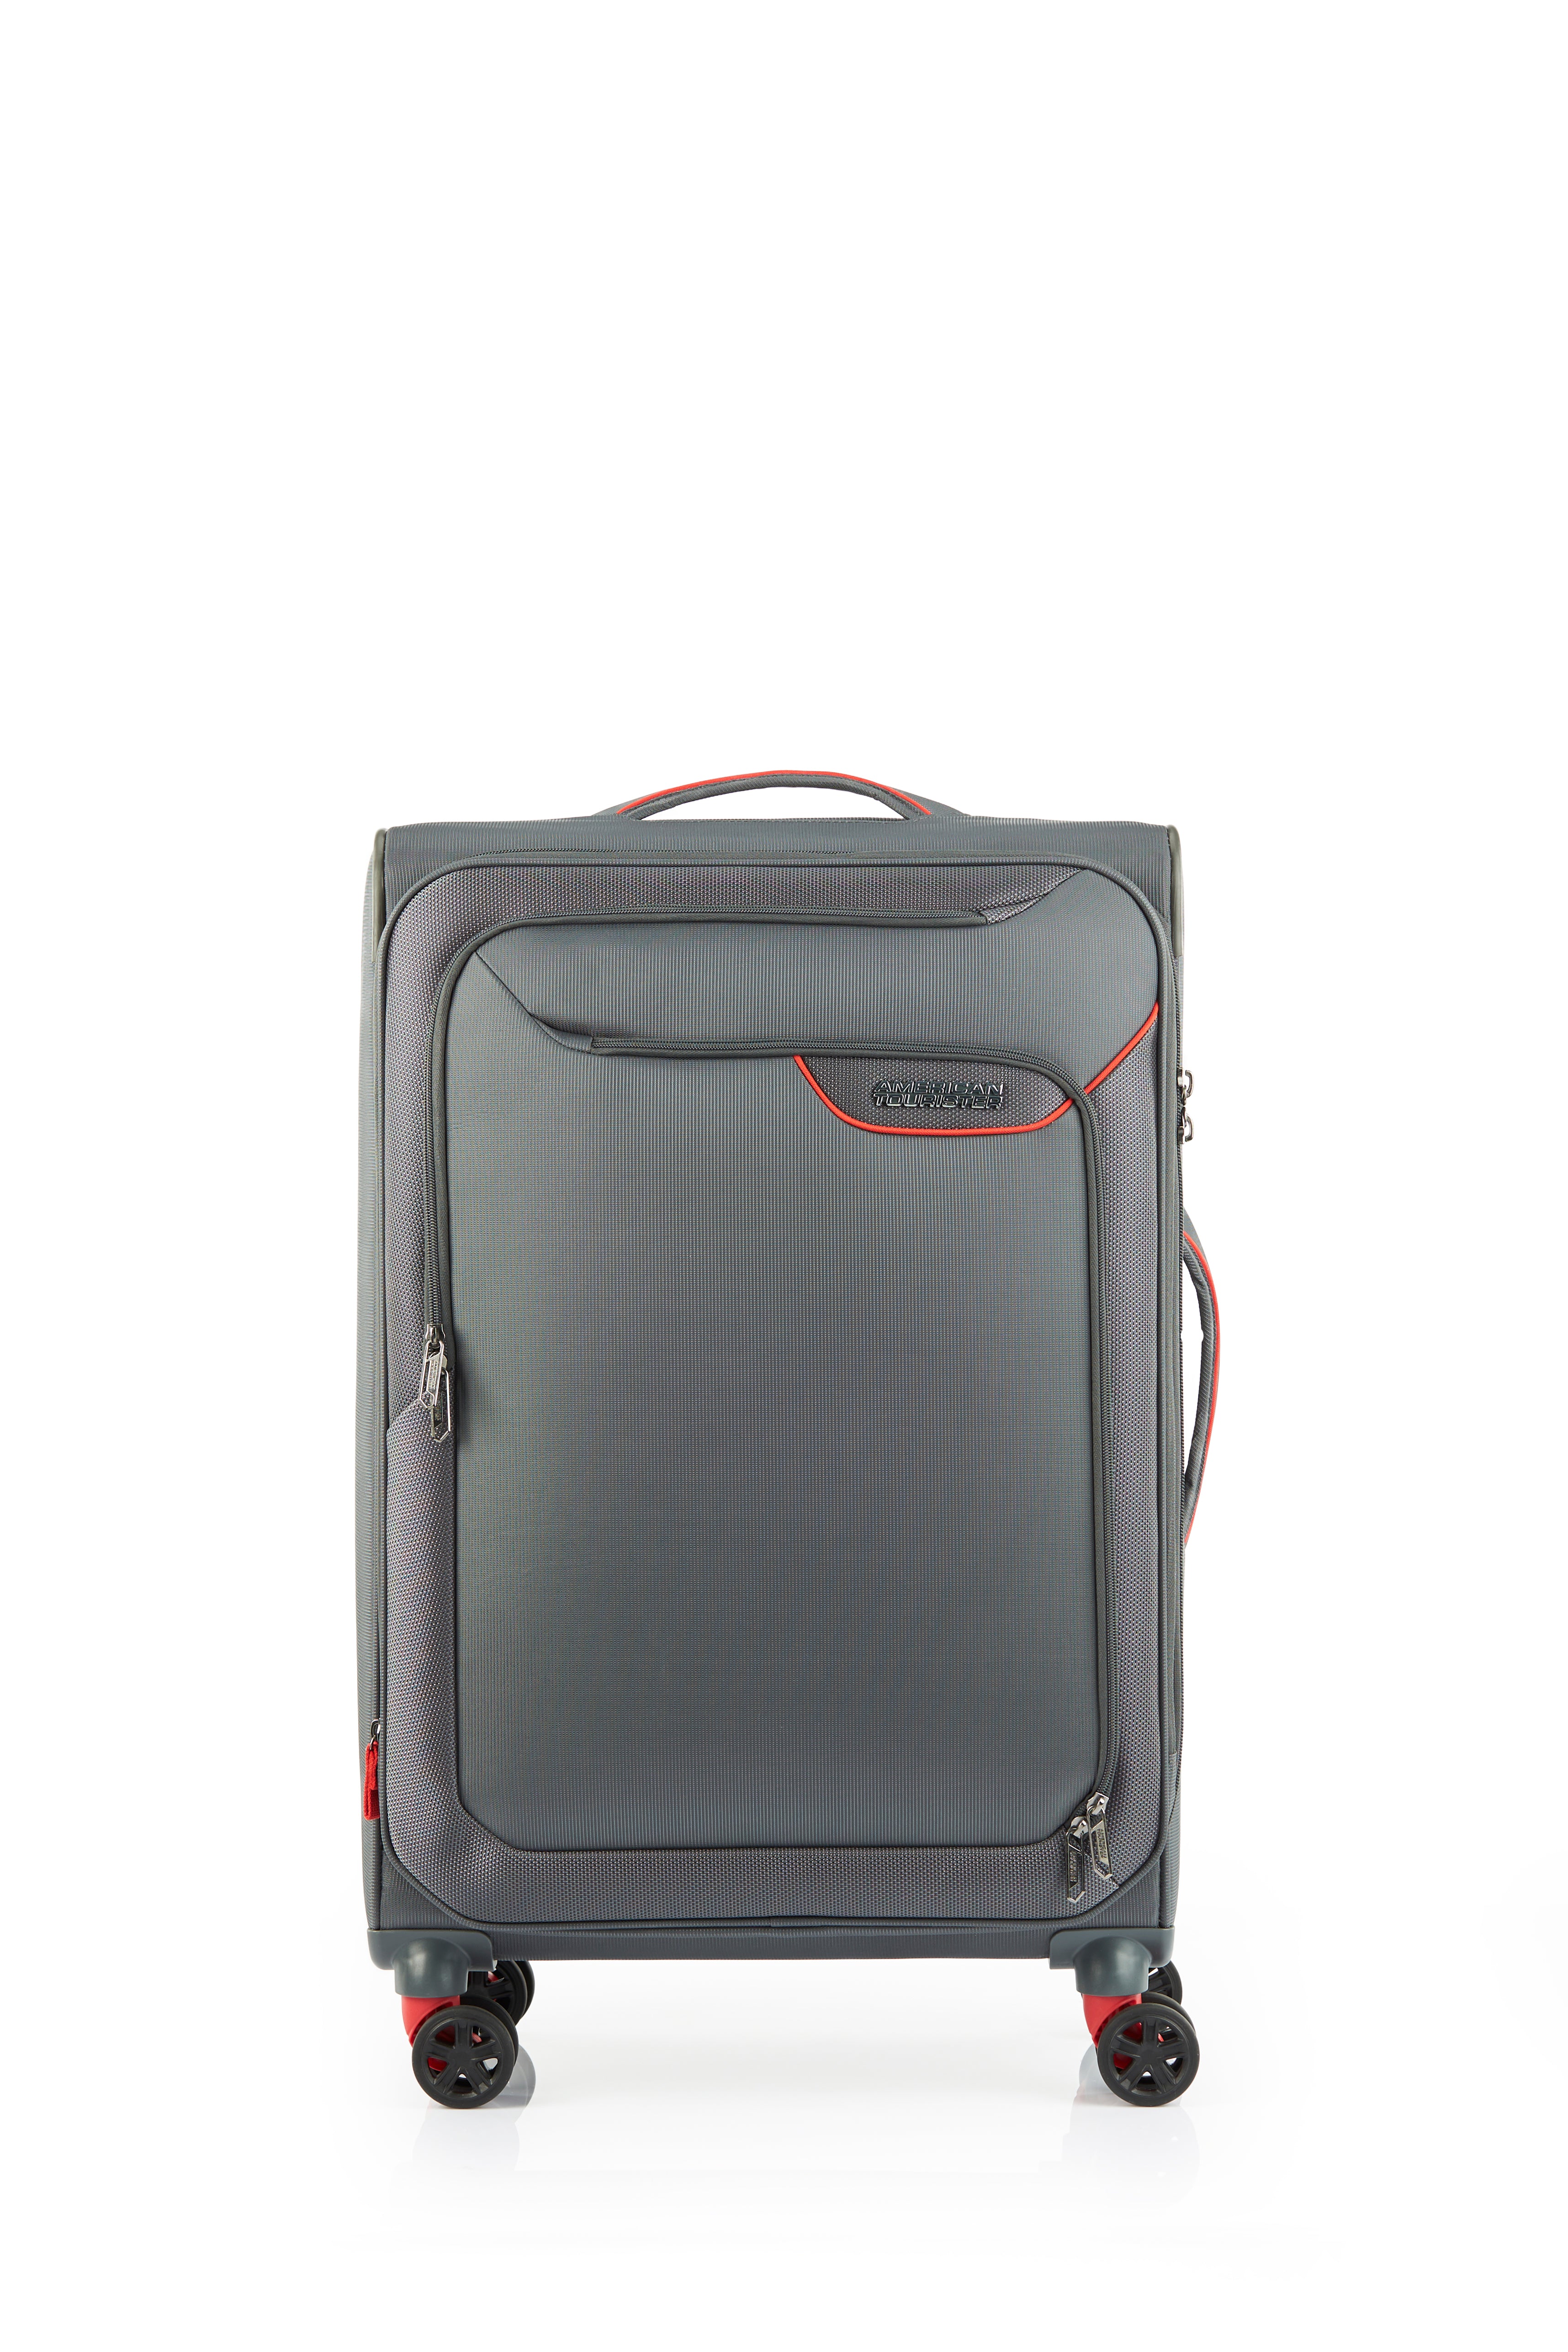 American Tourister - Applite ECO 71cm Medium Suitcase - Grey/Red - 0